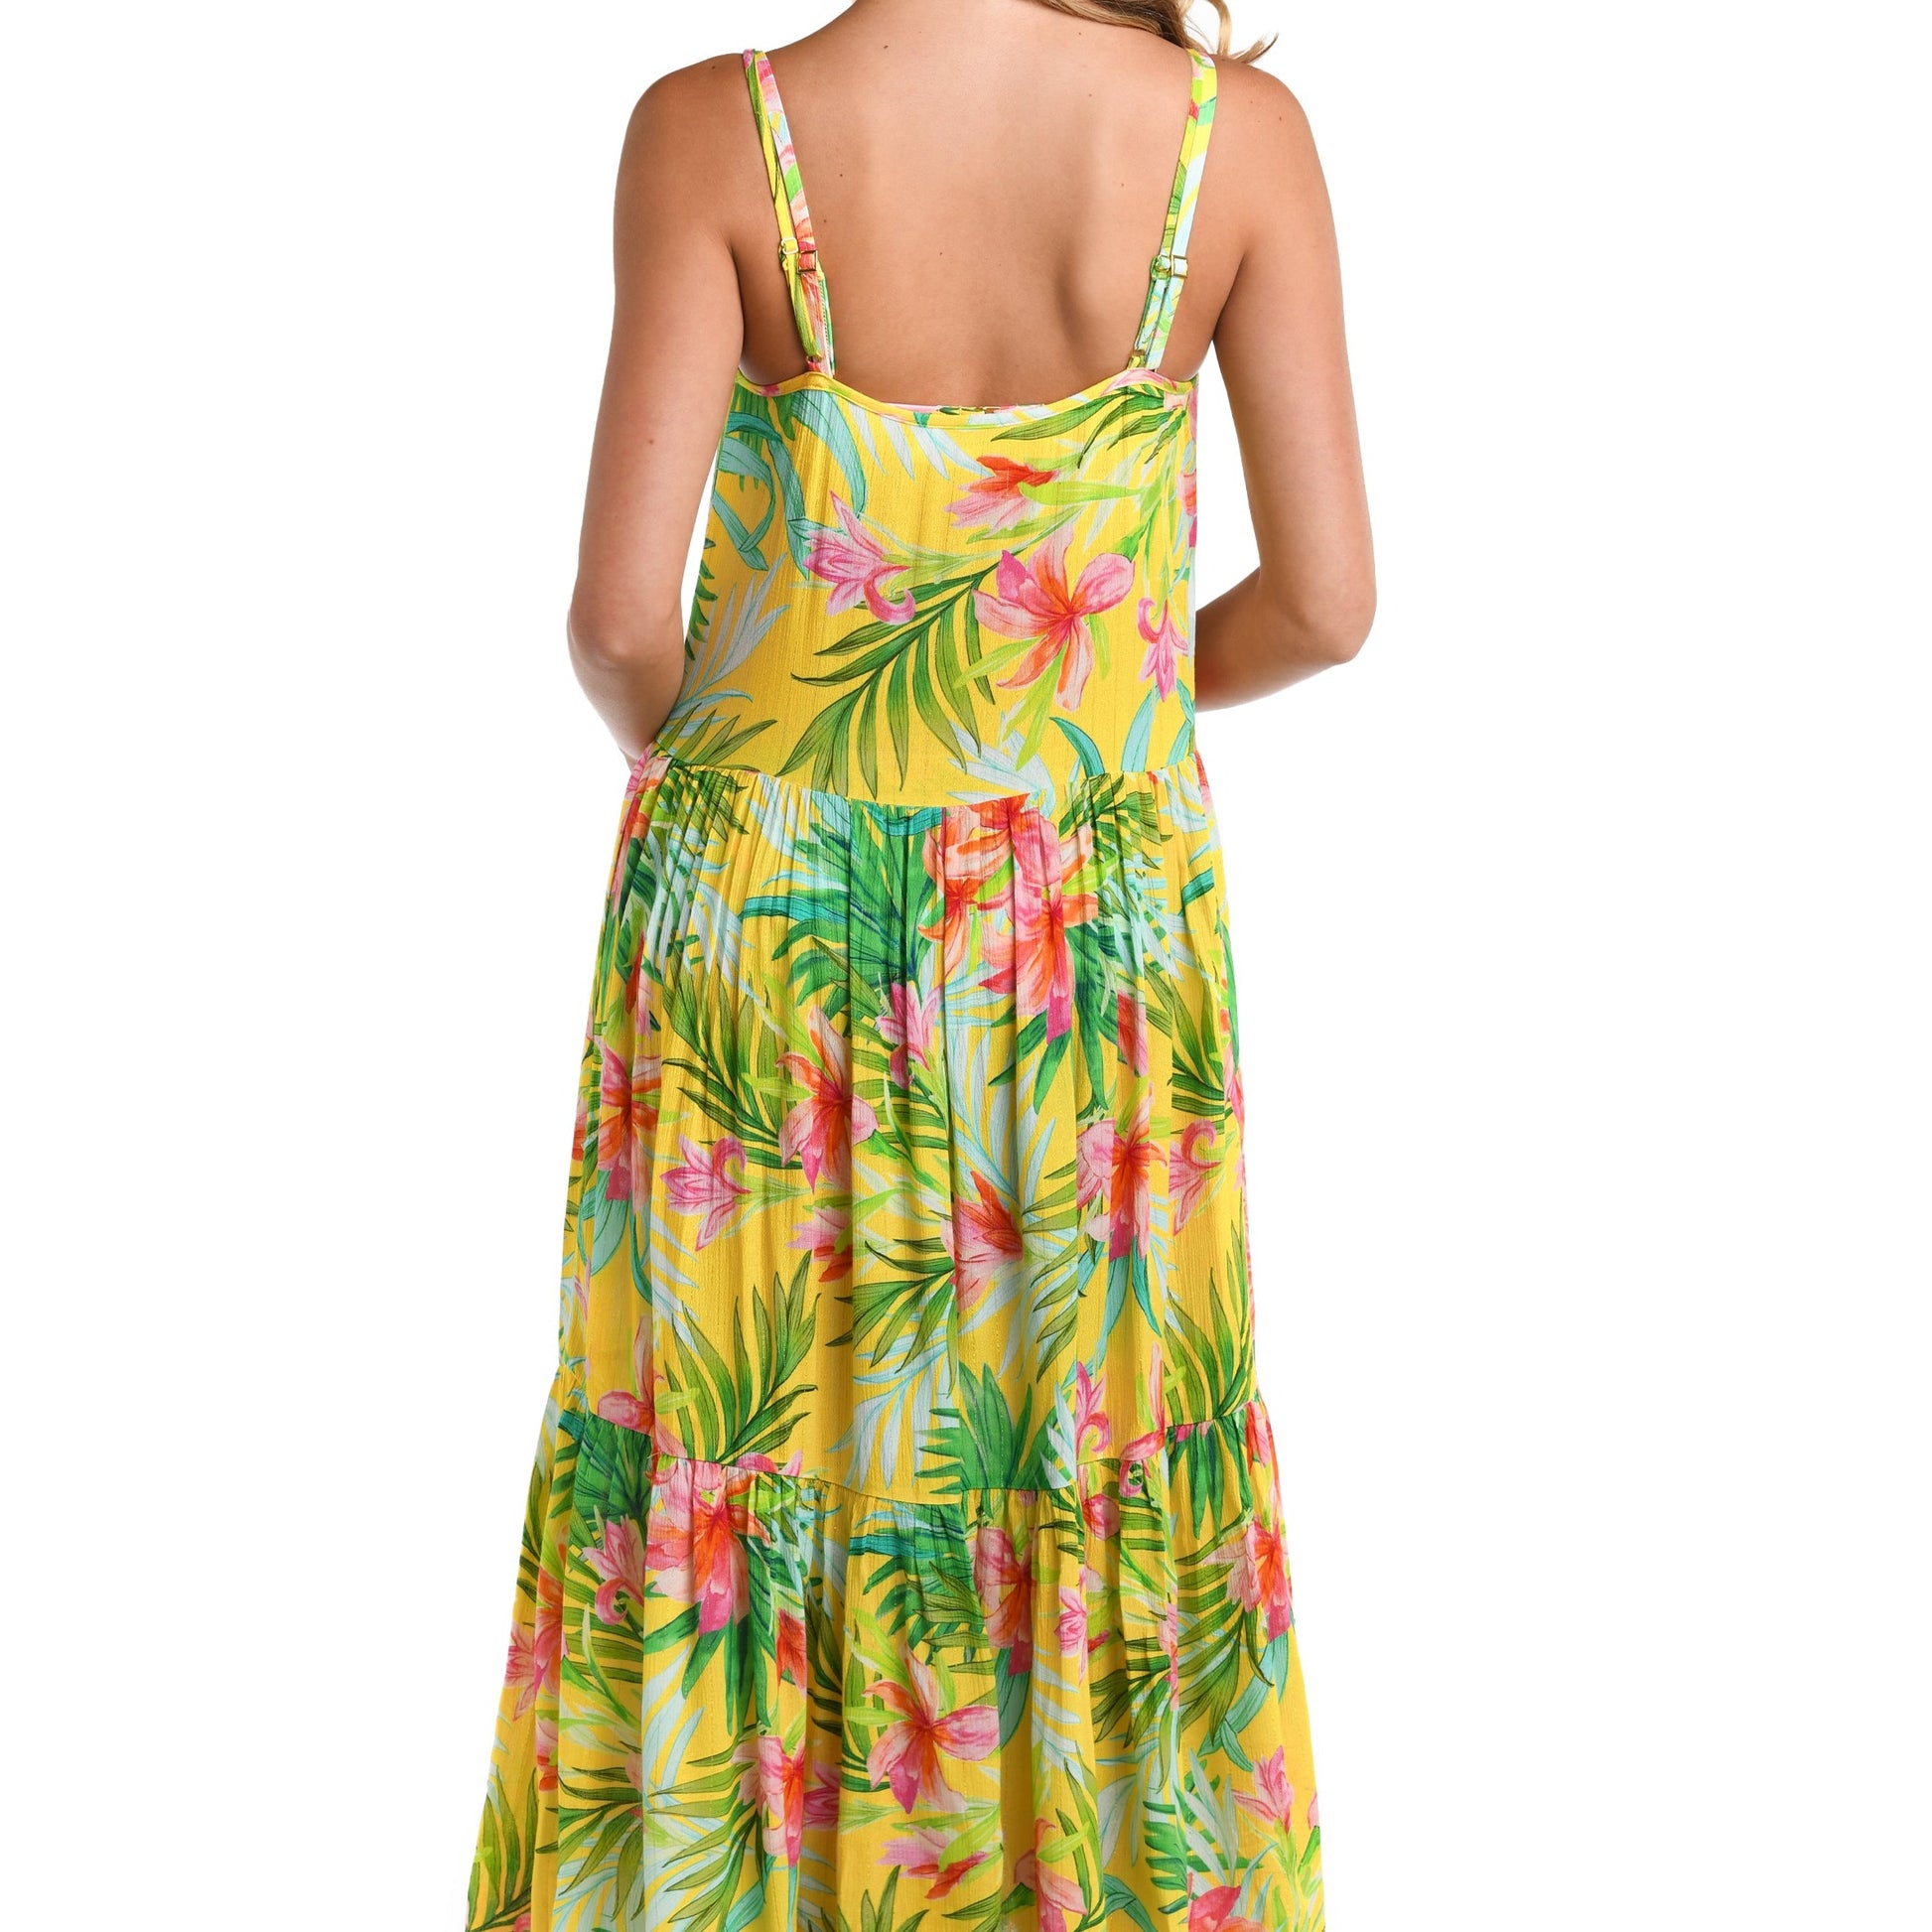 Calypso Bloom Midi Dress - LB4BR67 Swim - Cover ups LA BLANCA   